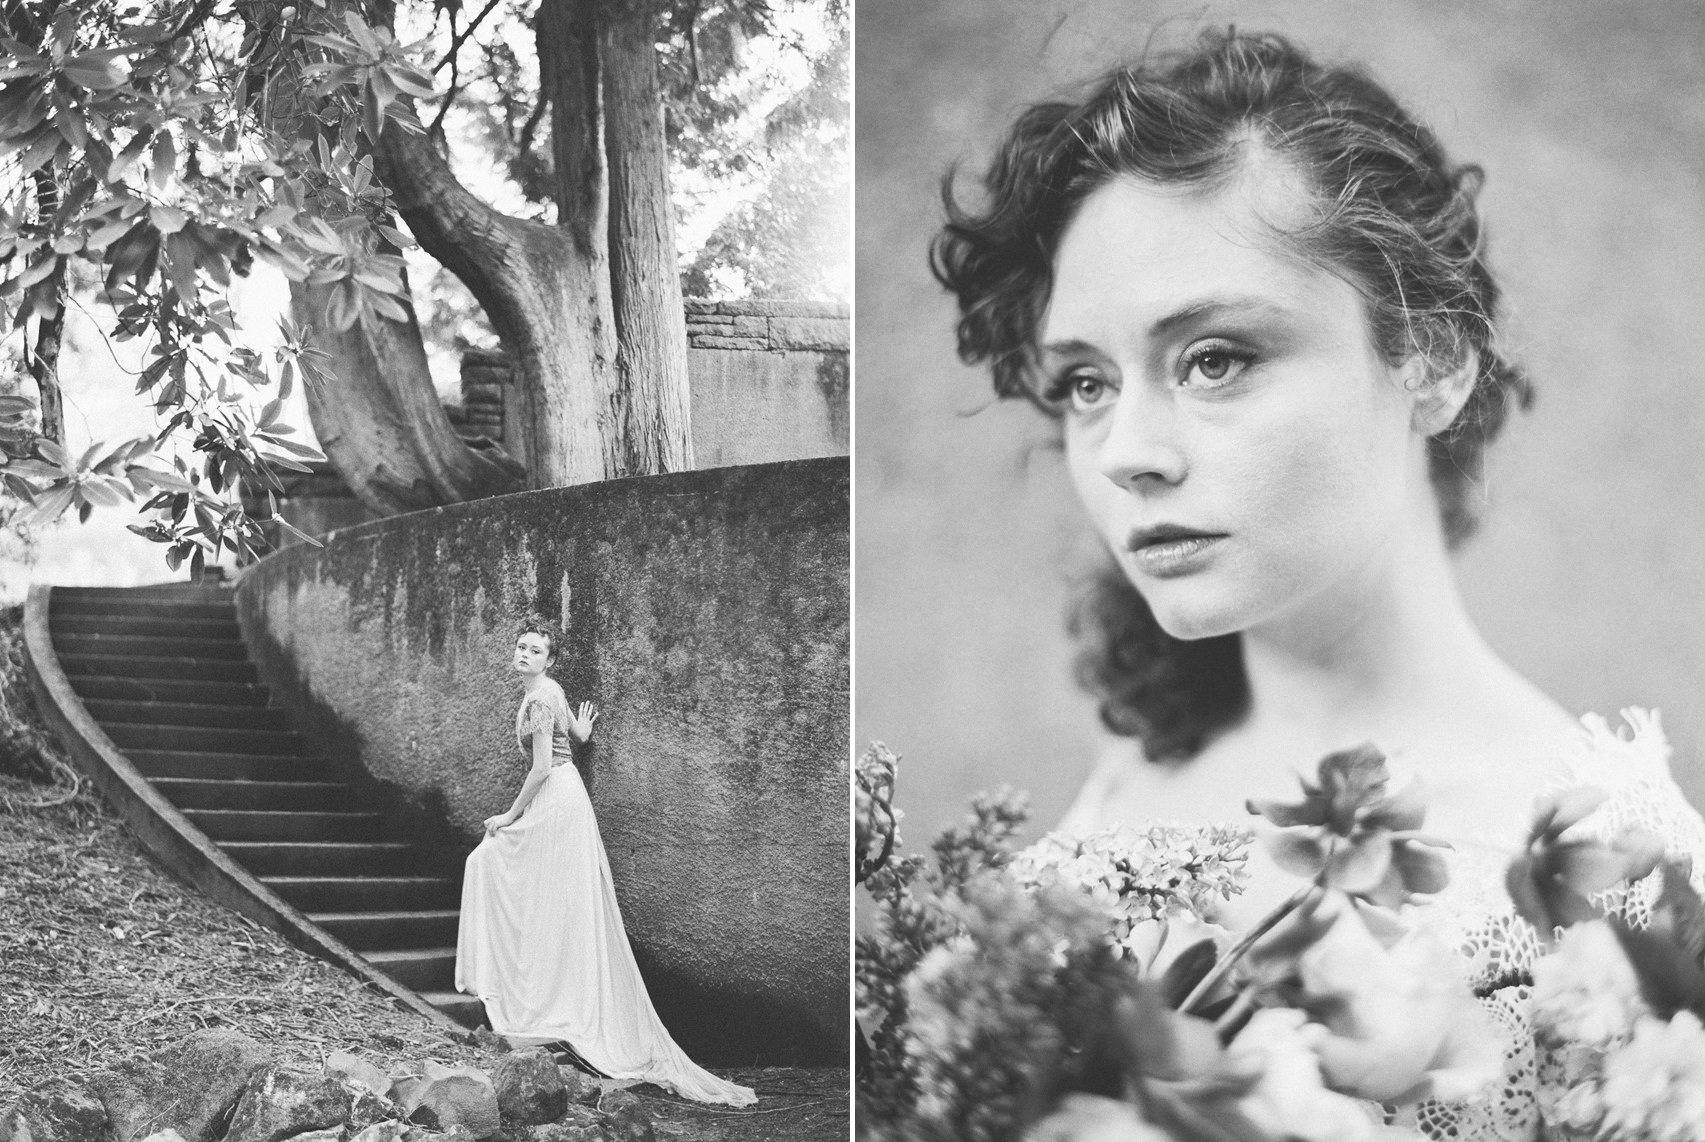 A Romantic Gothic Bridal Inspiration Shoot